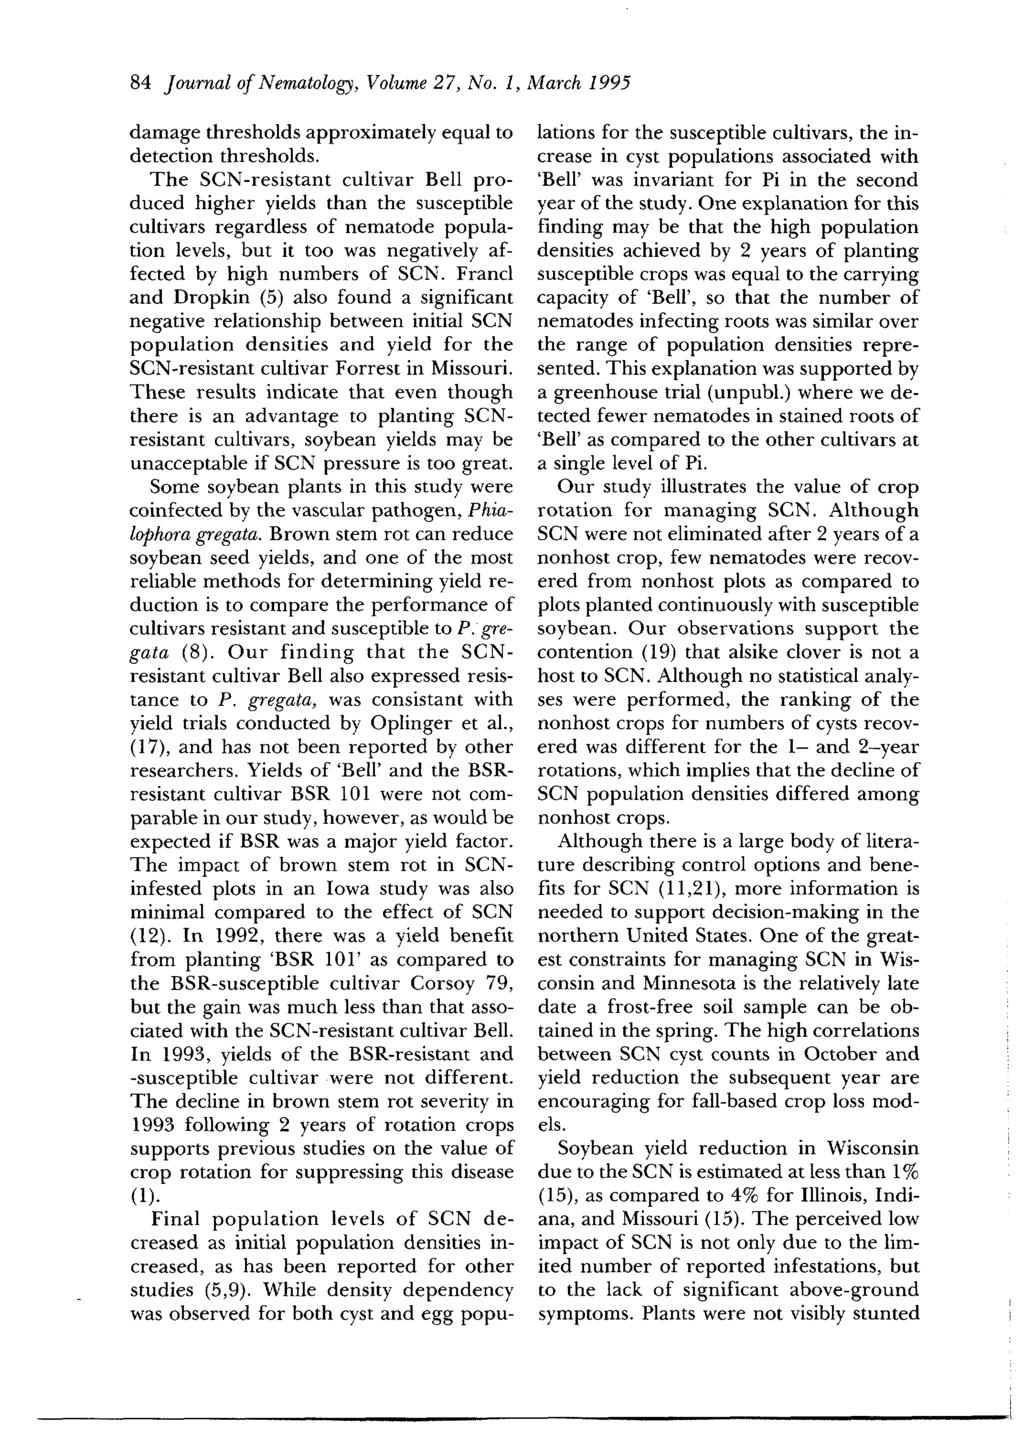 84 Journal of Nematology, Volume 2 7, No. 1, March 1995 damage thresholds approximately equal to detection thresholds.